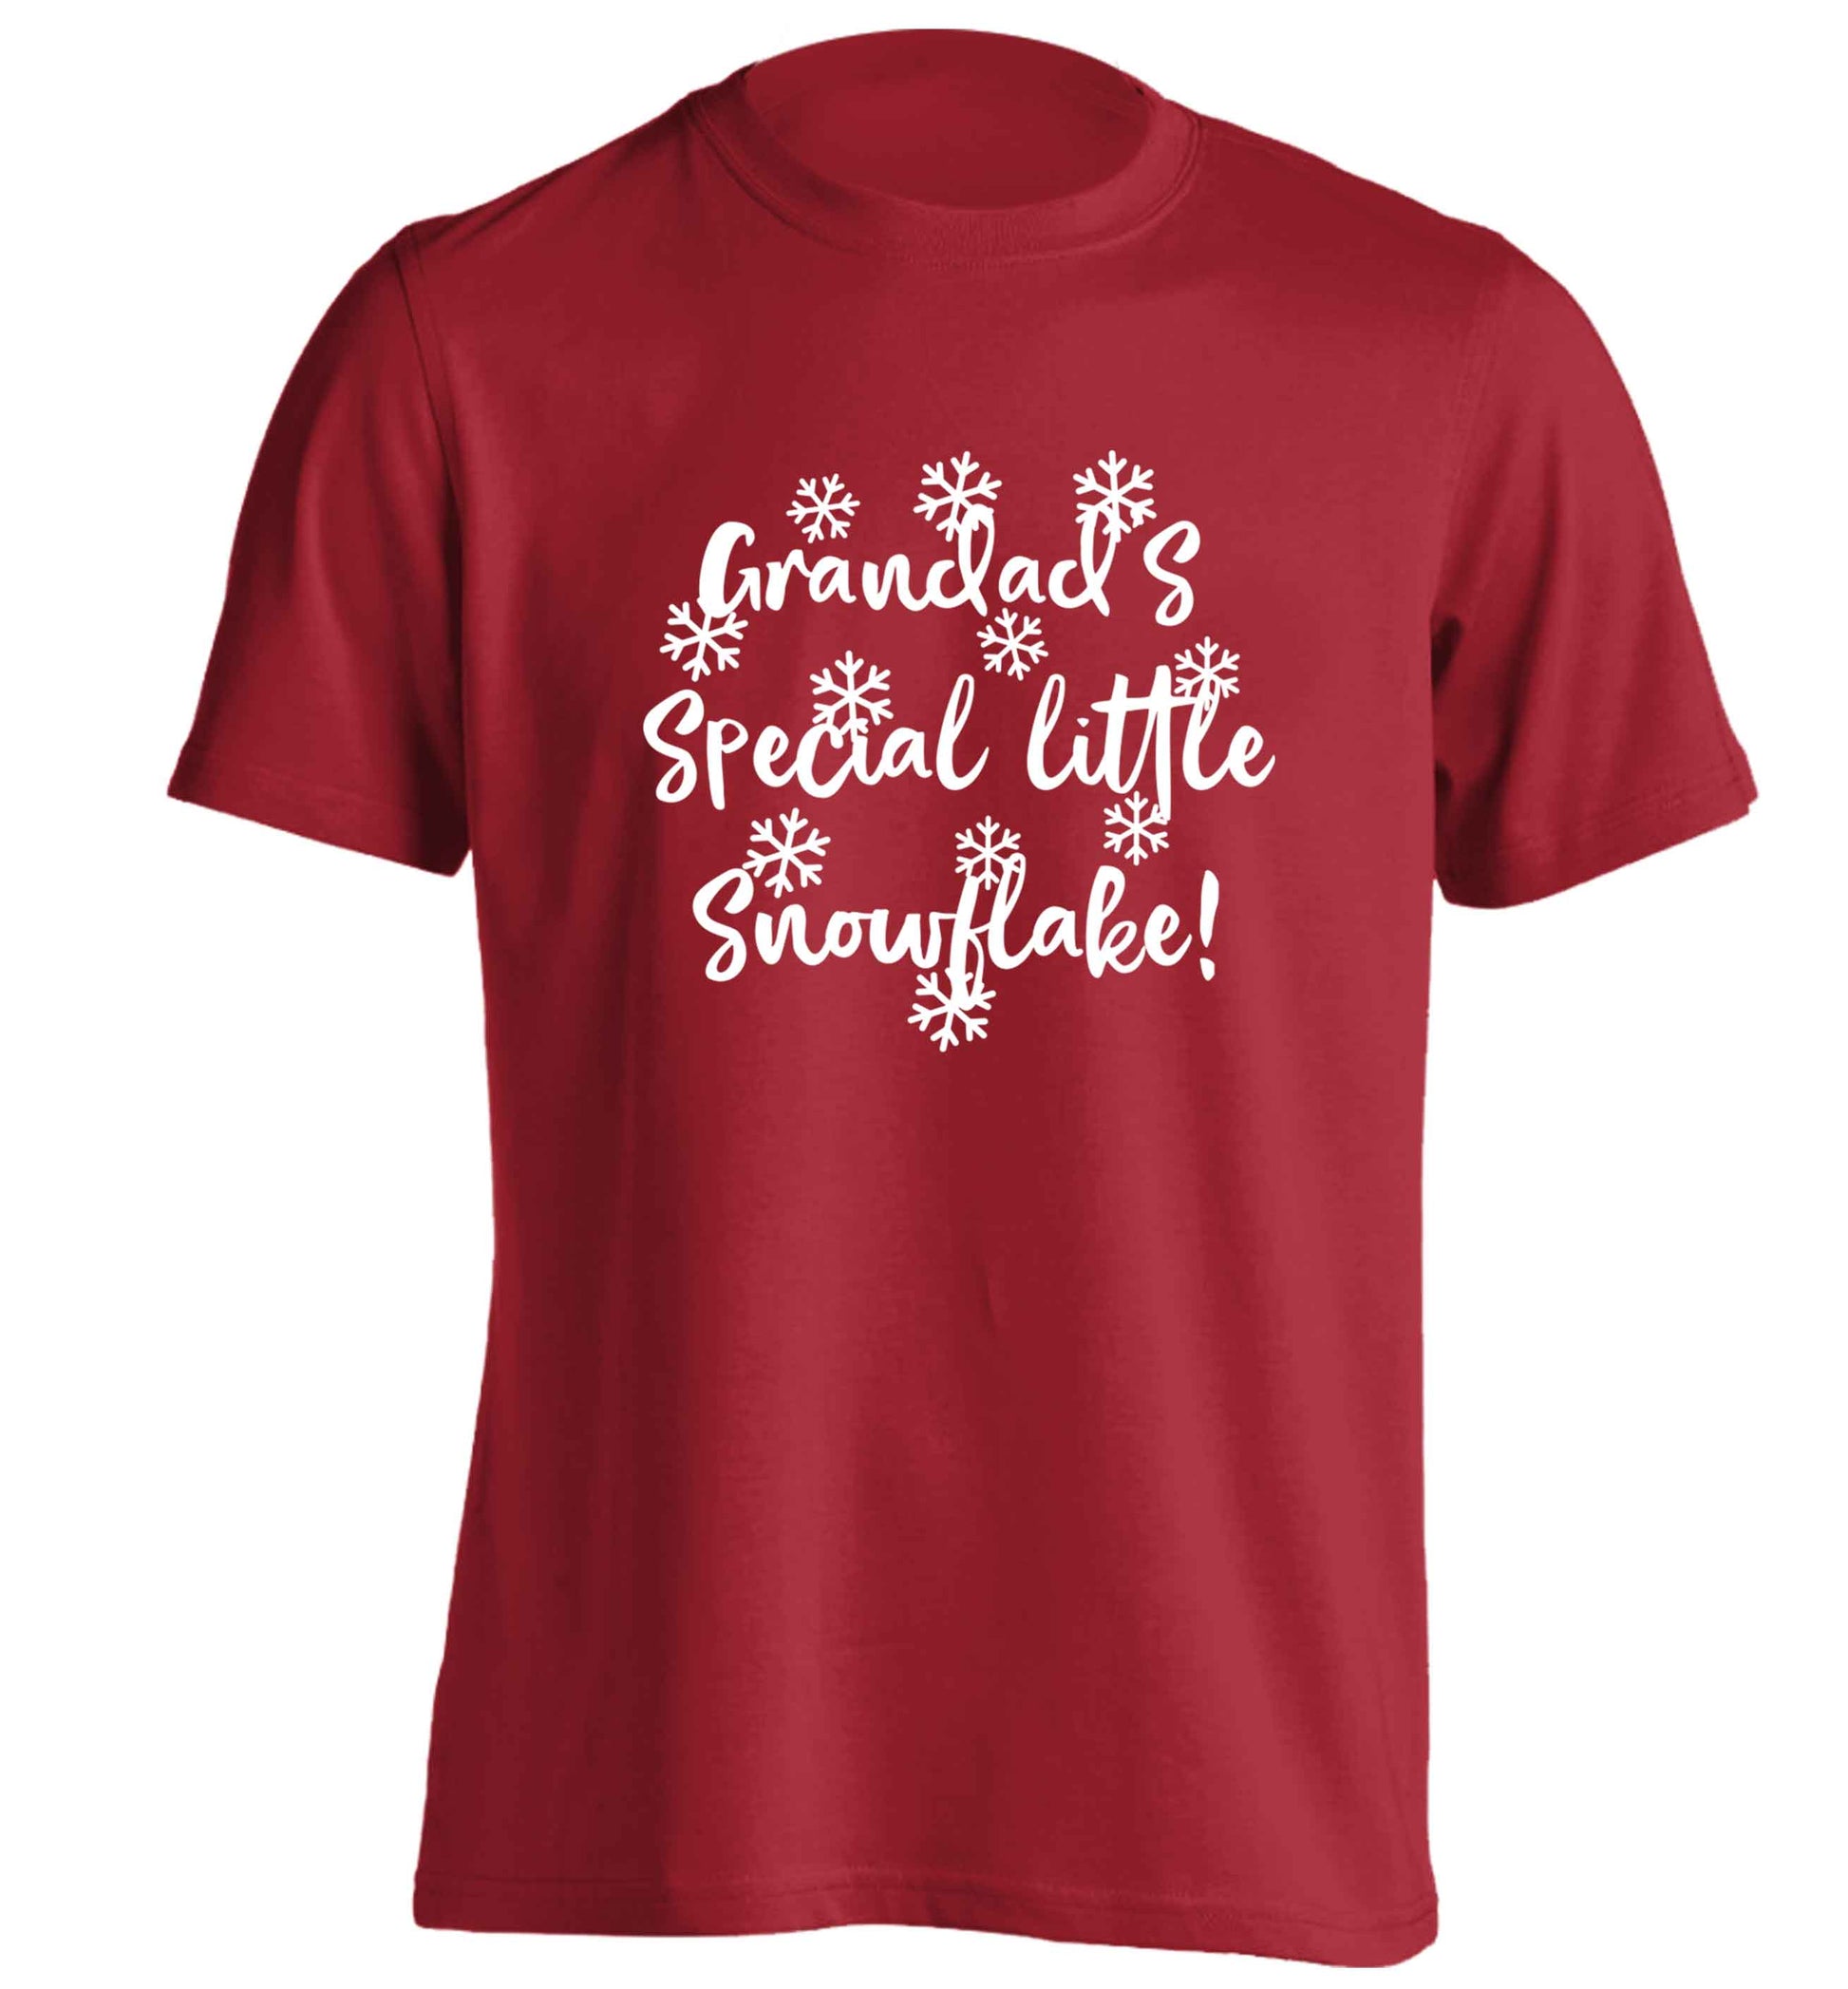 Grandad's special little snowflake adults unisex red Tshirt 2XL